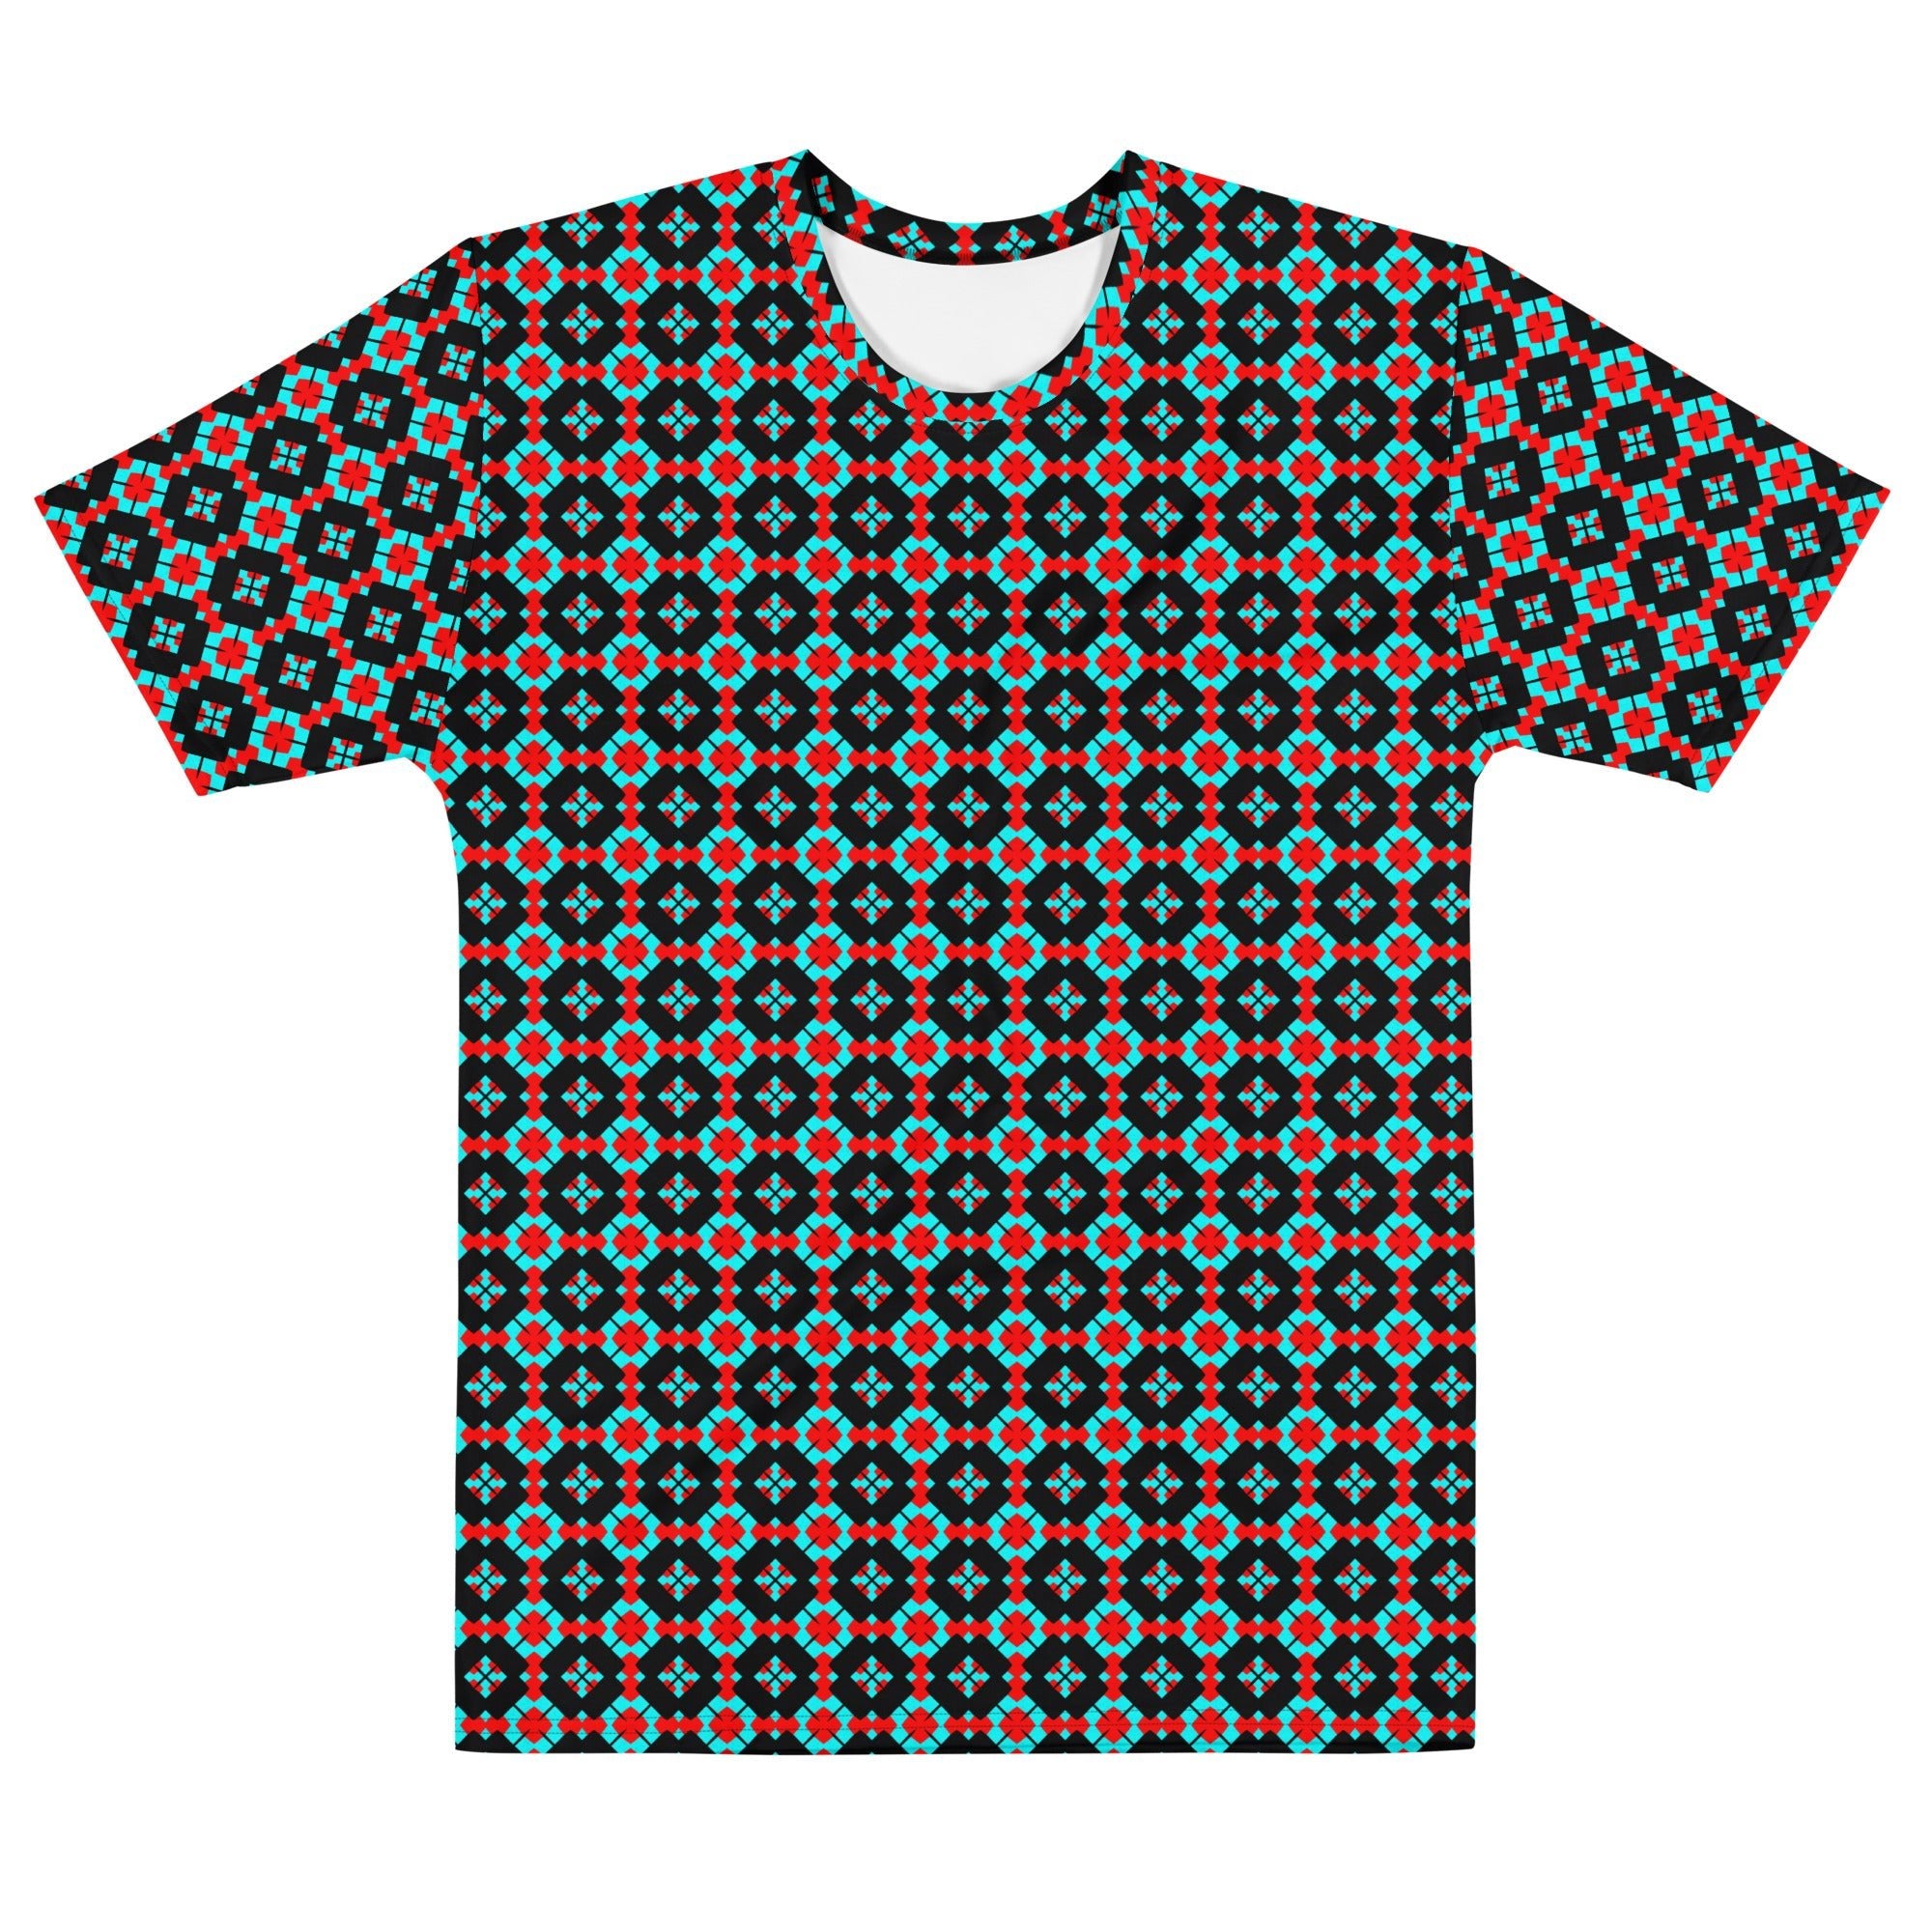 Urban Plaid Men's t-shirt - kayzers